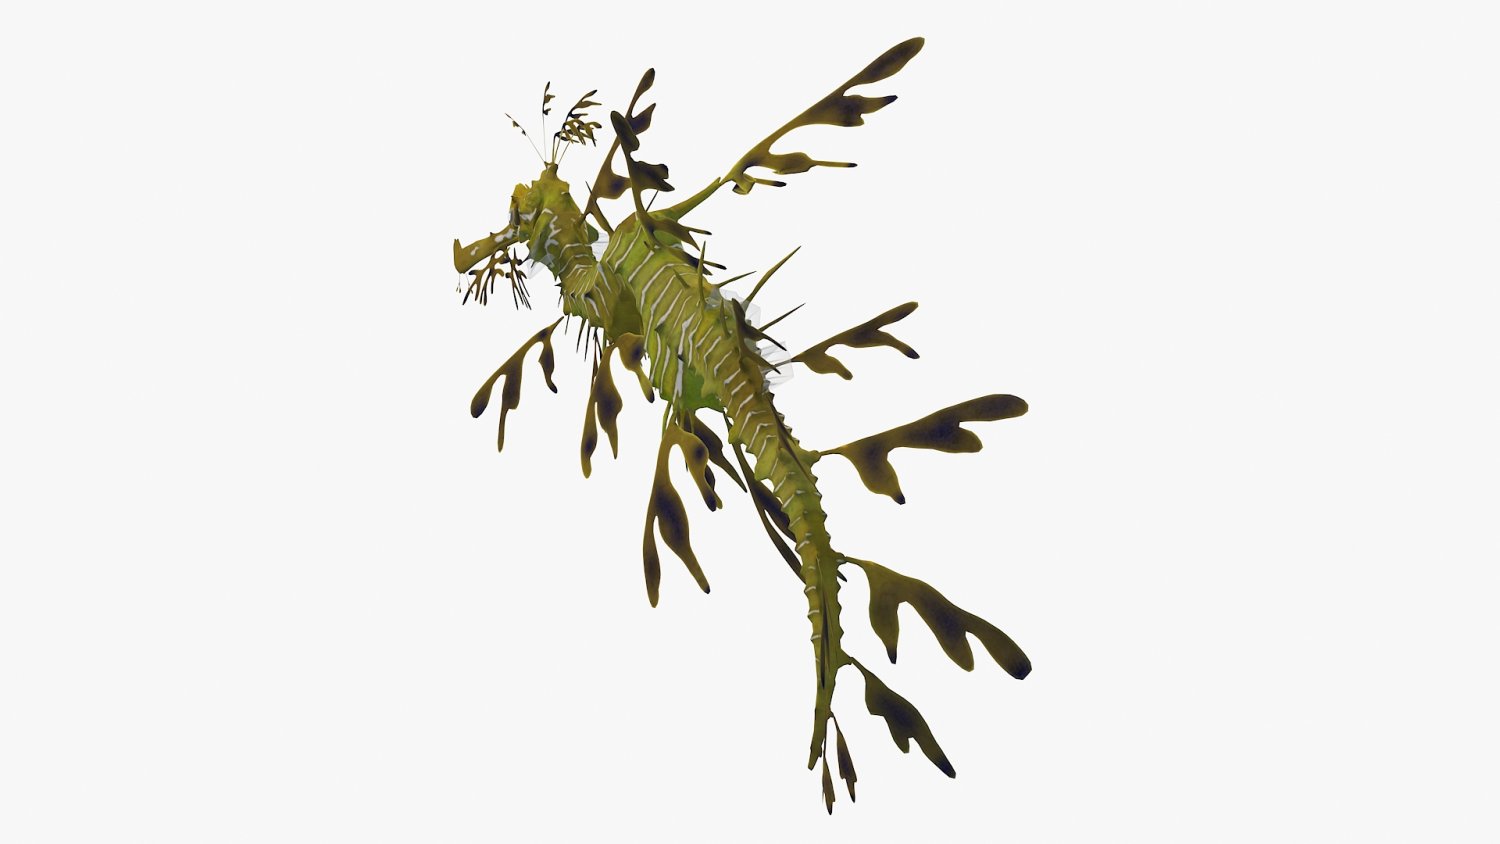 Seaweed dragon 3D Model $10 - .blend - Free3D